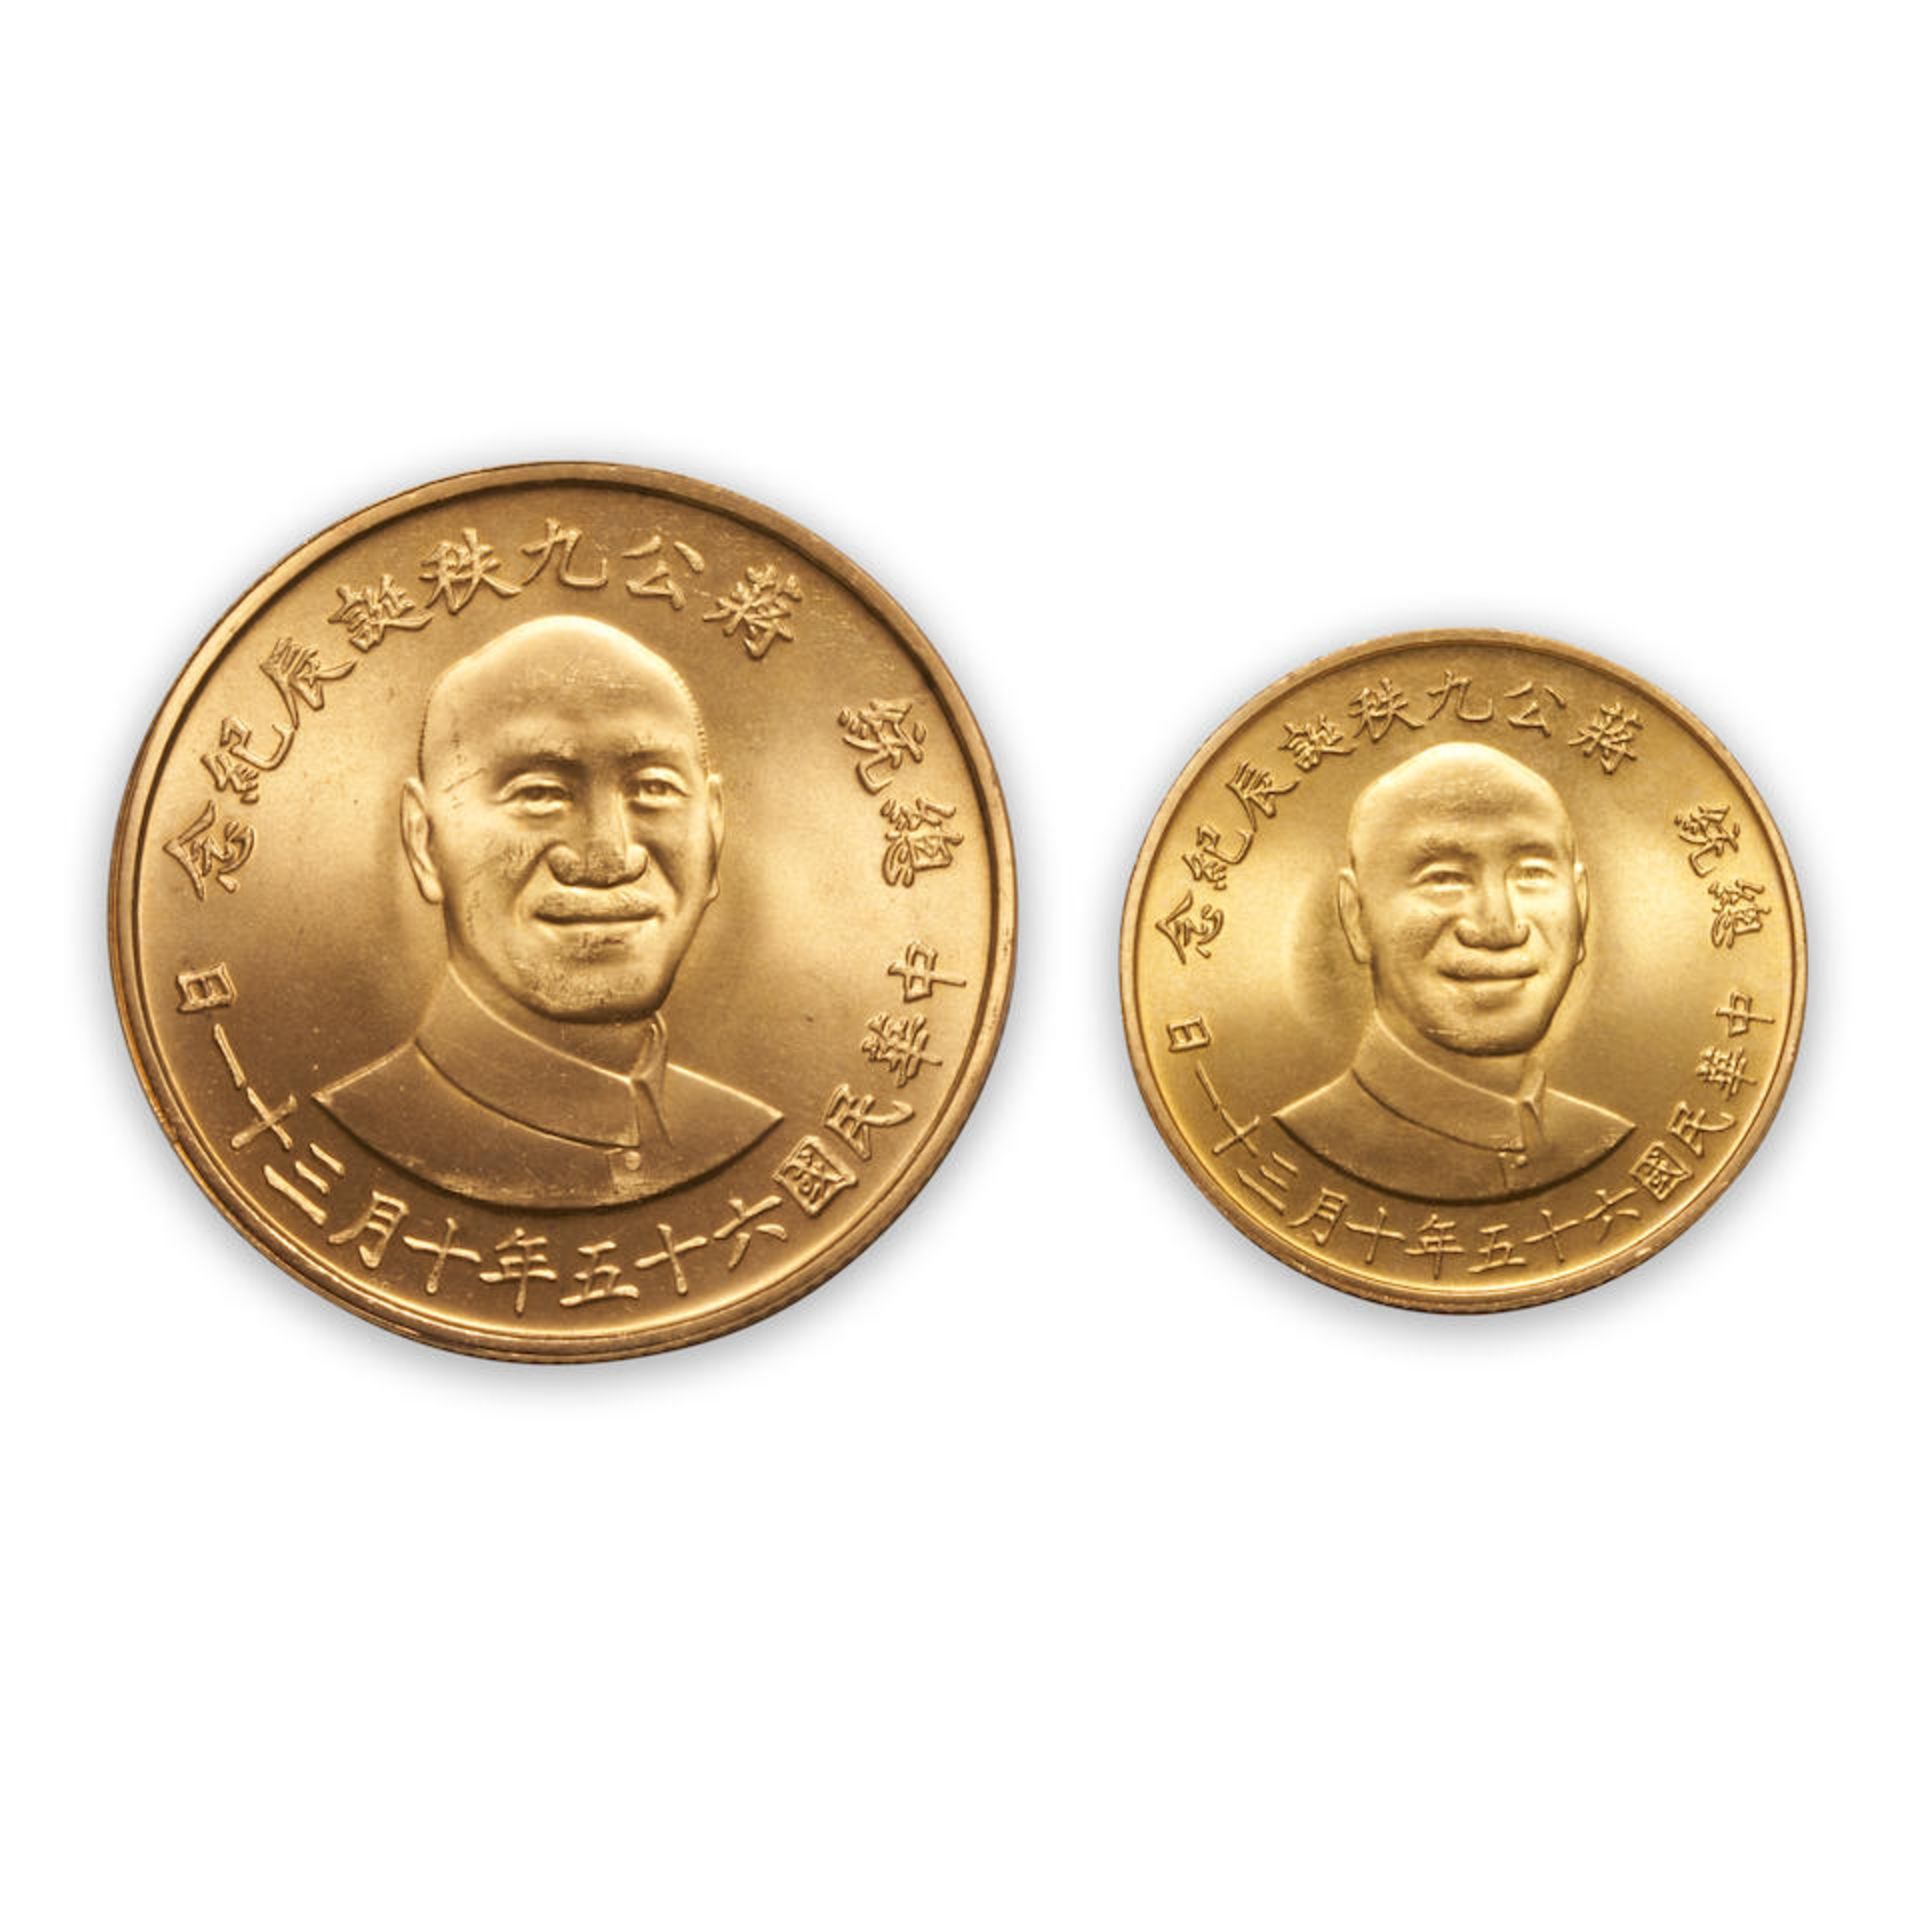 Two Republic of China (Taiwan) Gold Medals of Sun Yat Sen.